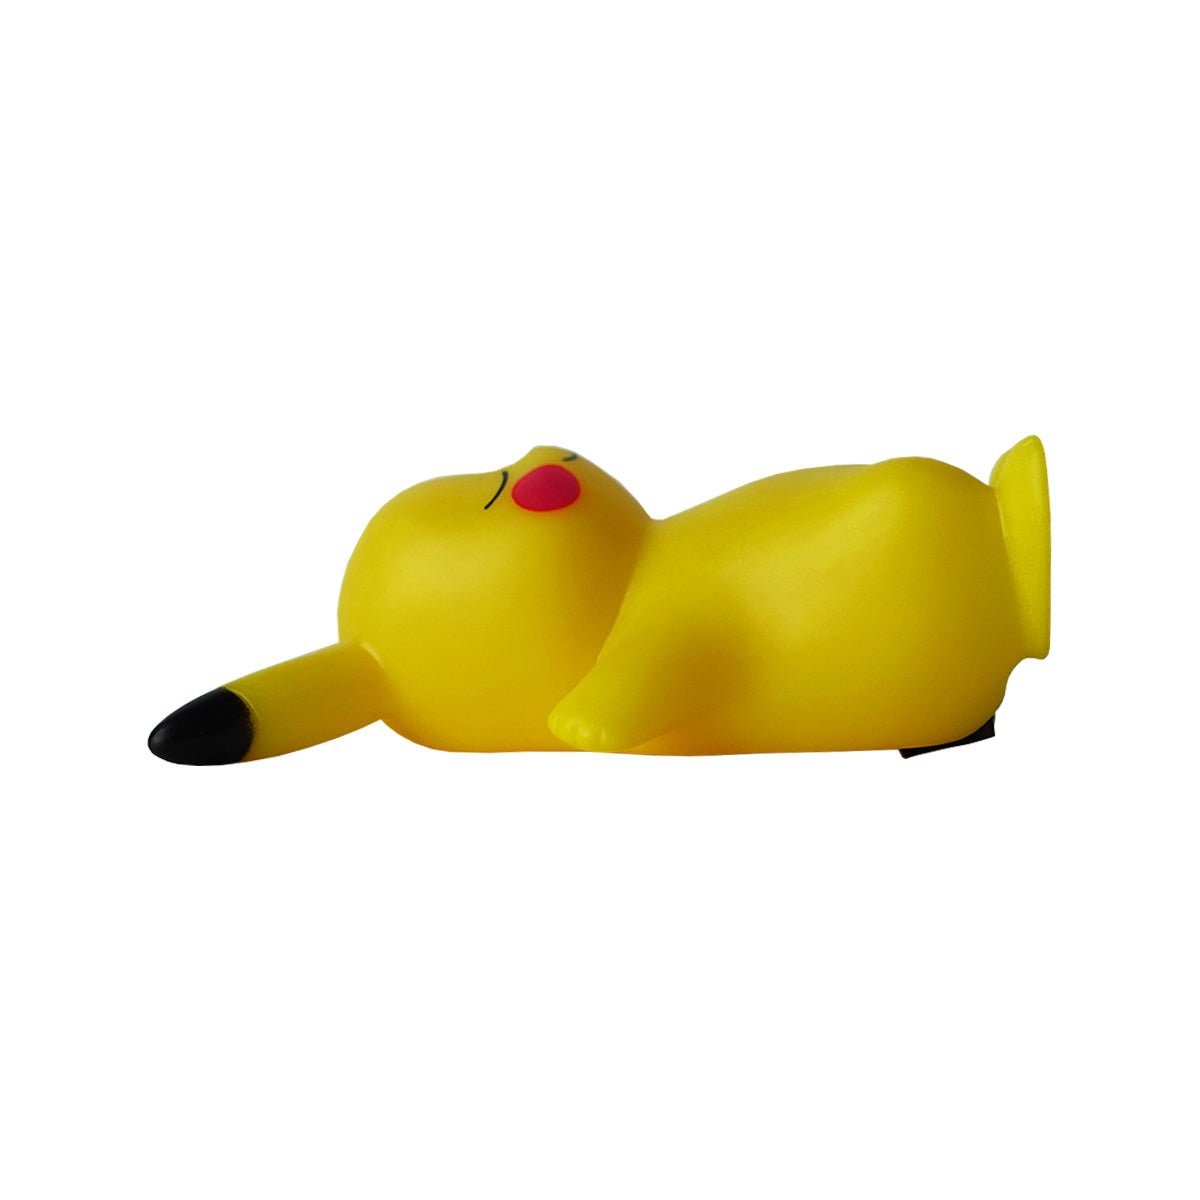 Sleeping Pikachu Figure Nightlight - دمية مضيئة - Store 974 | ستور ٩٧٤